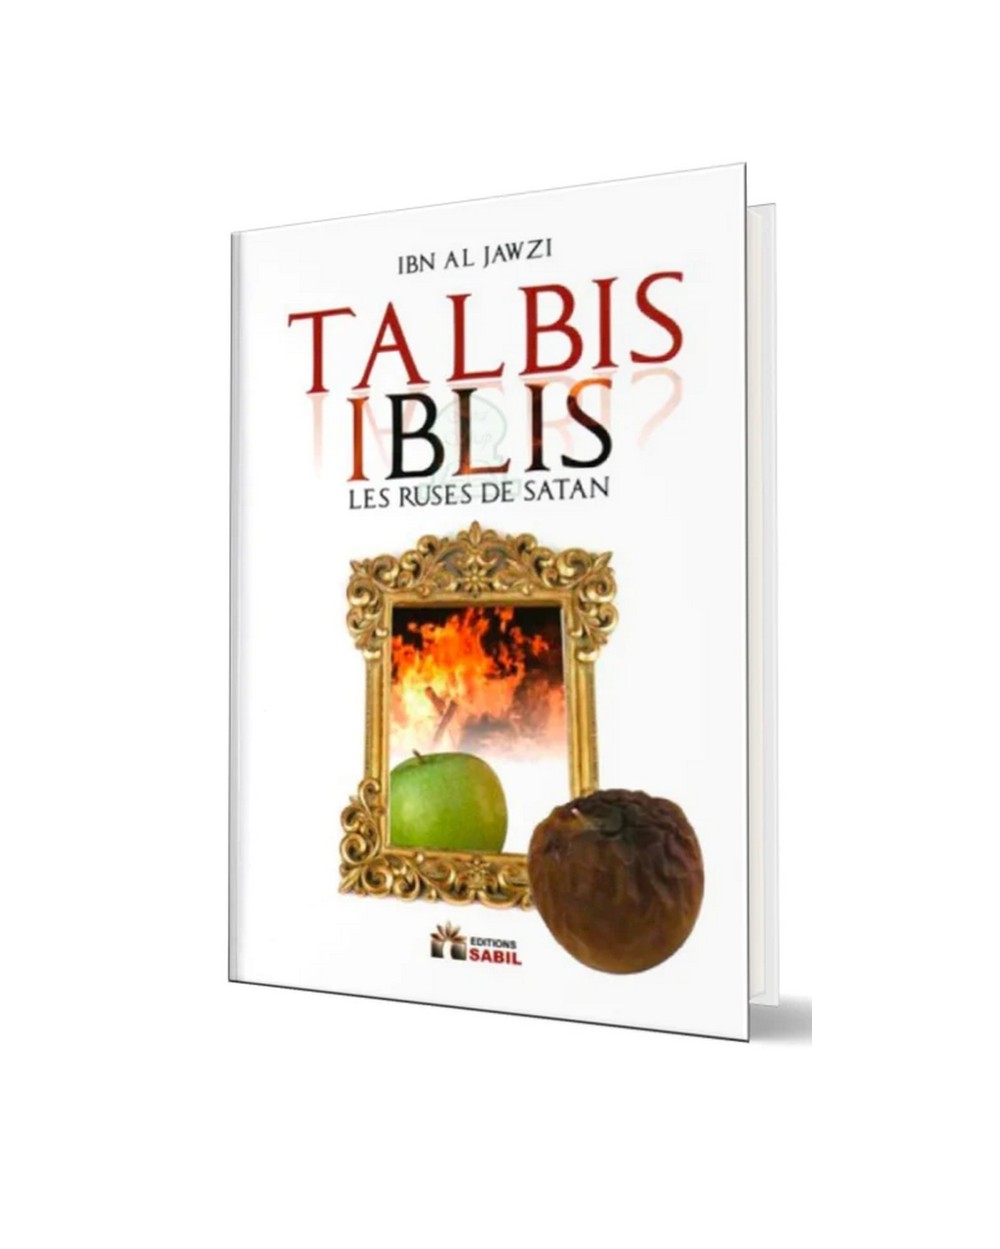 Talbis Iblis - Les ruses de satan - Ibn al jawzi